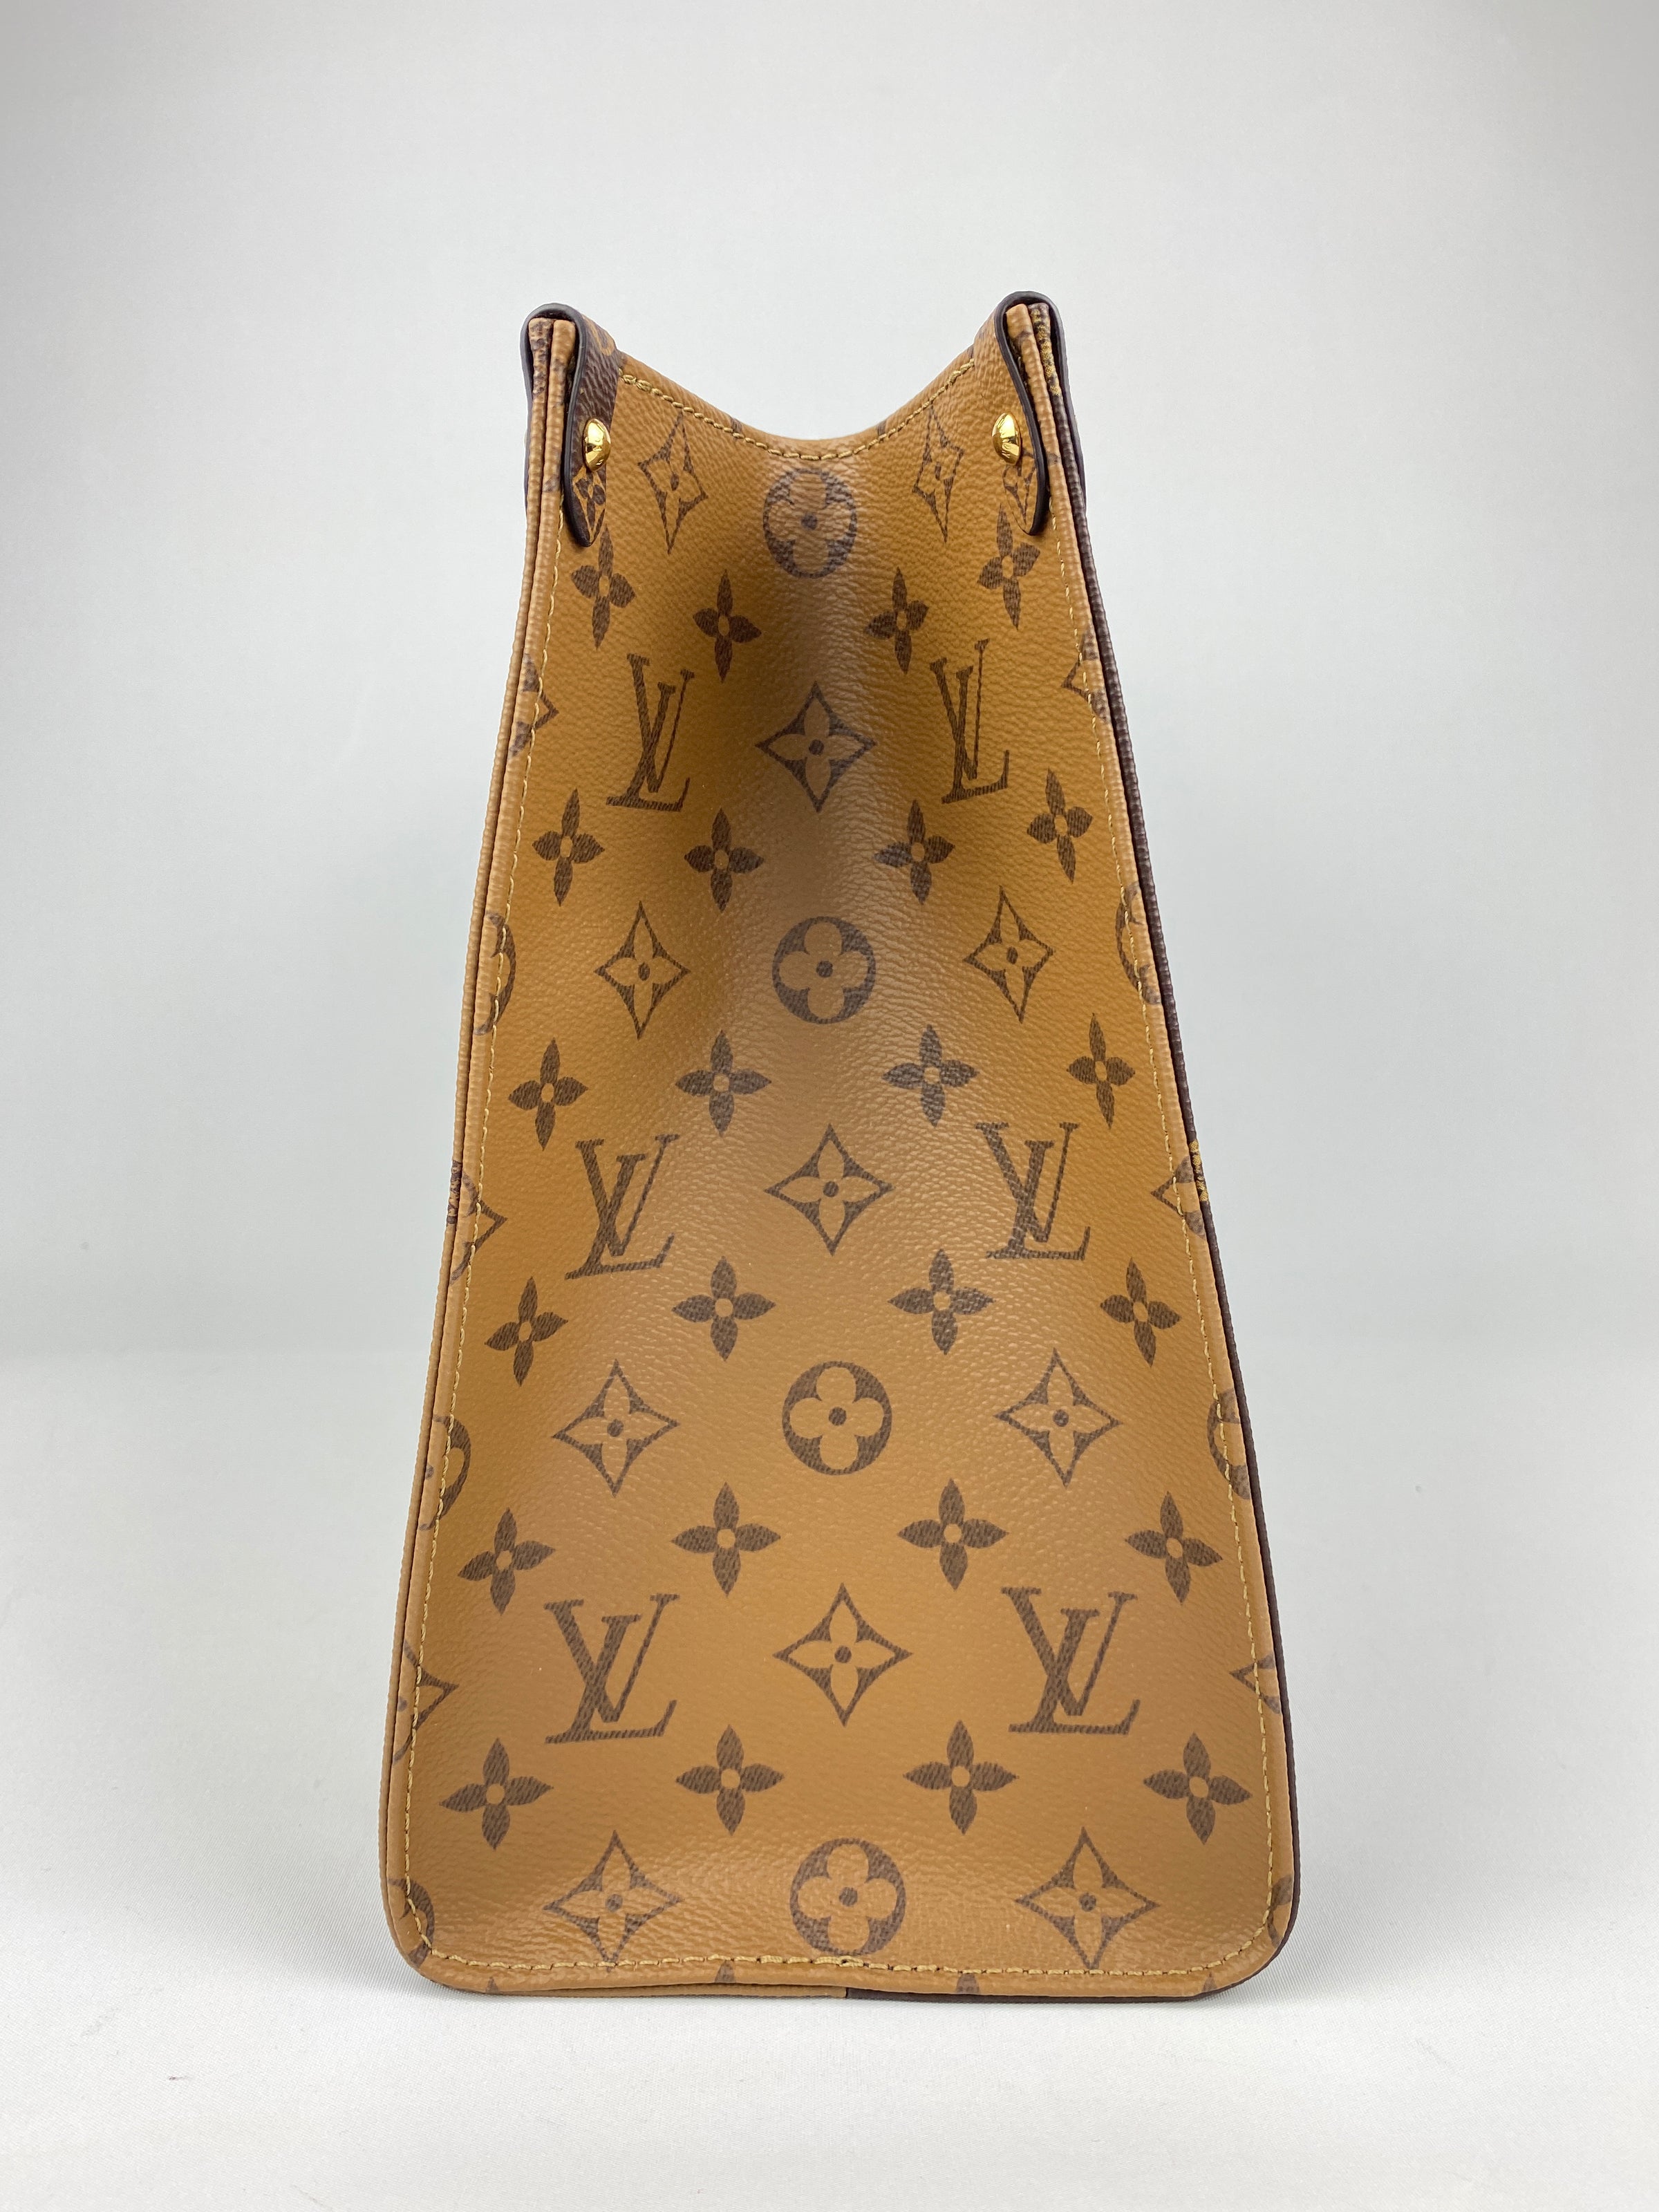 LOUIS VUITTON Double V Monogram Red Leather Tote Shoulder Bag